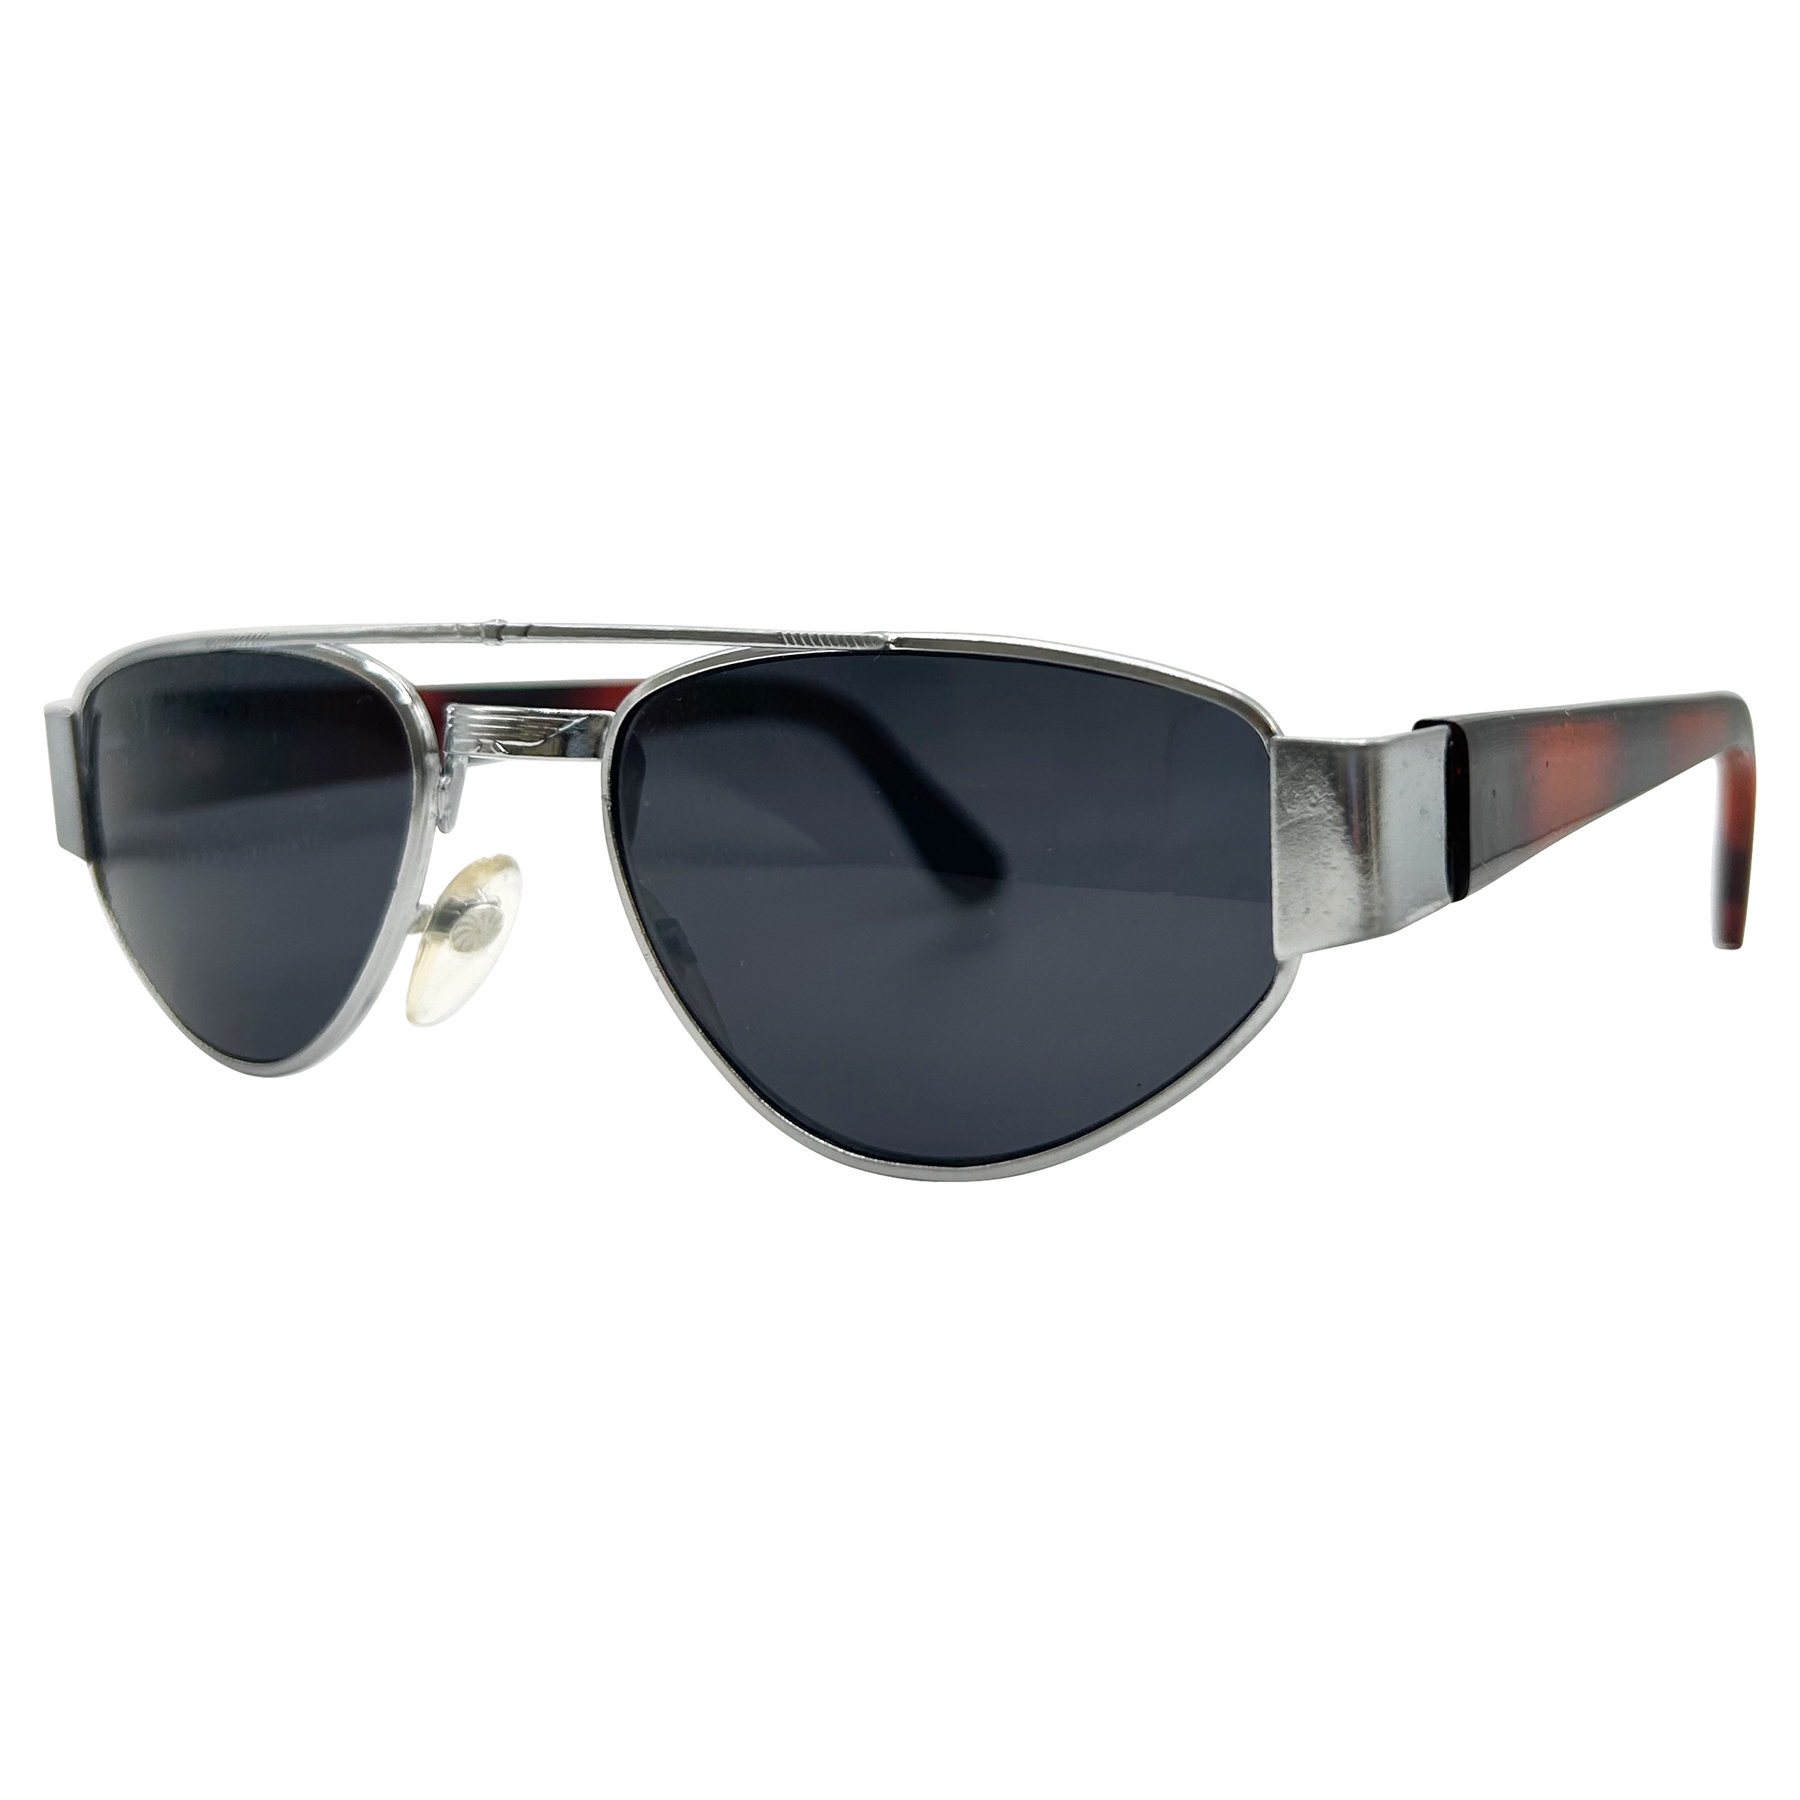 ZZYZX Tortoise Silver/ Super Dark Sports Sunglasses